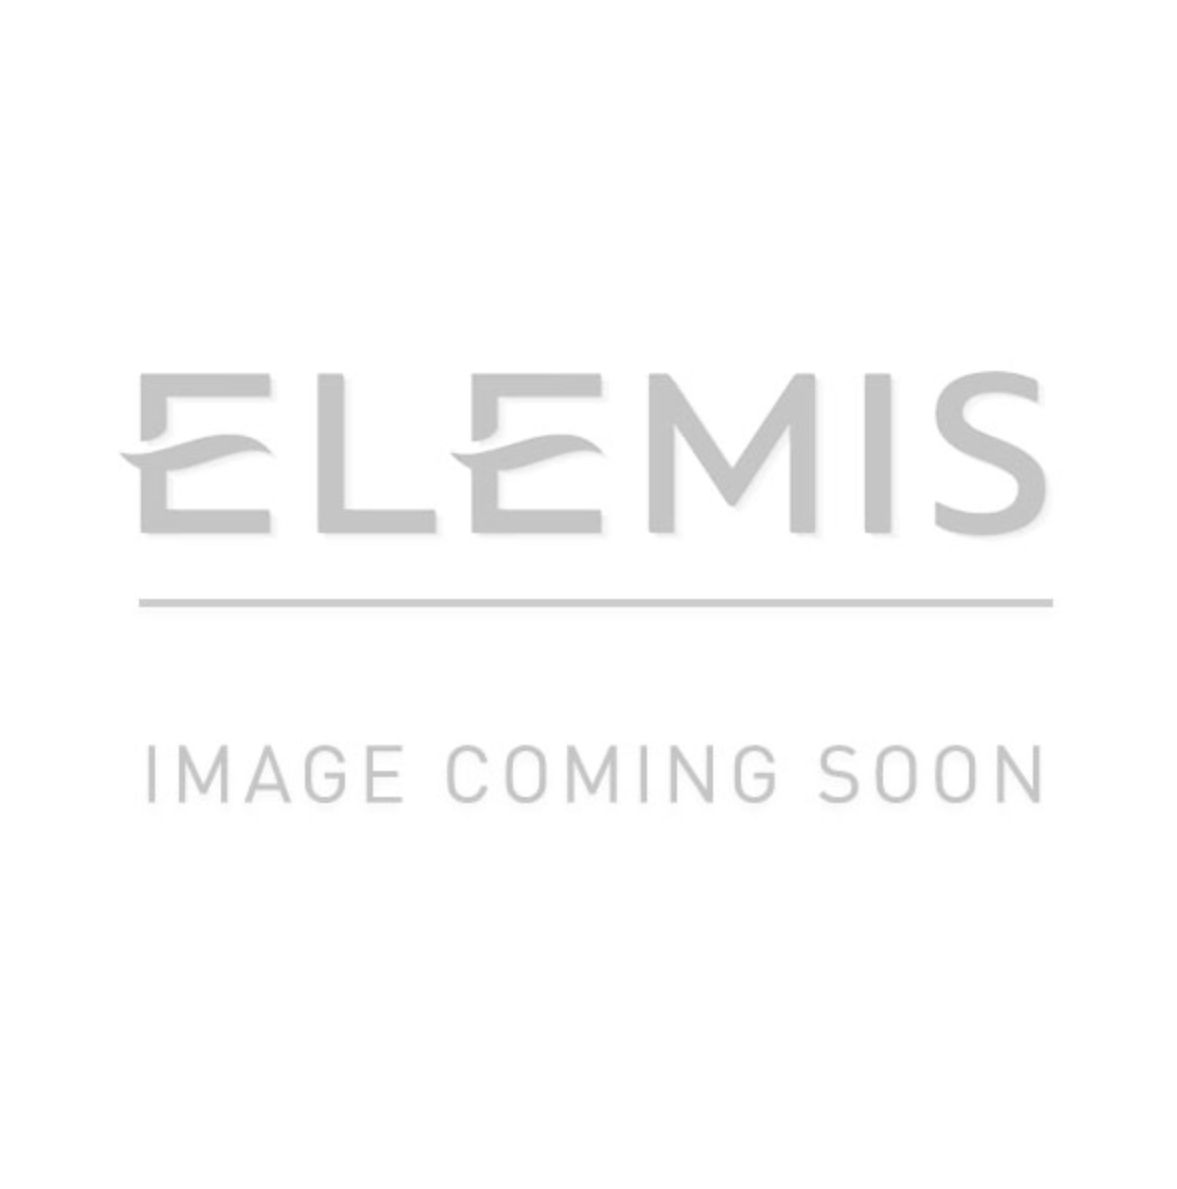 ELEMIS Superfood Facial Wash - A nourishing, nutrient-dense gel cleanser | Elemis UK